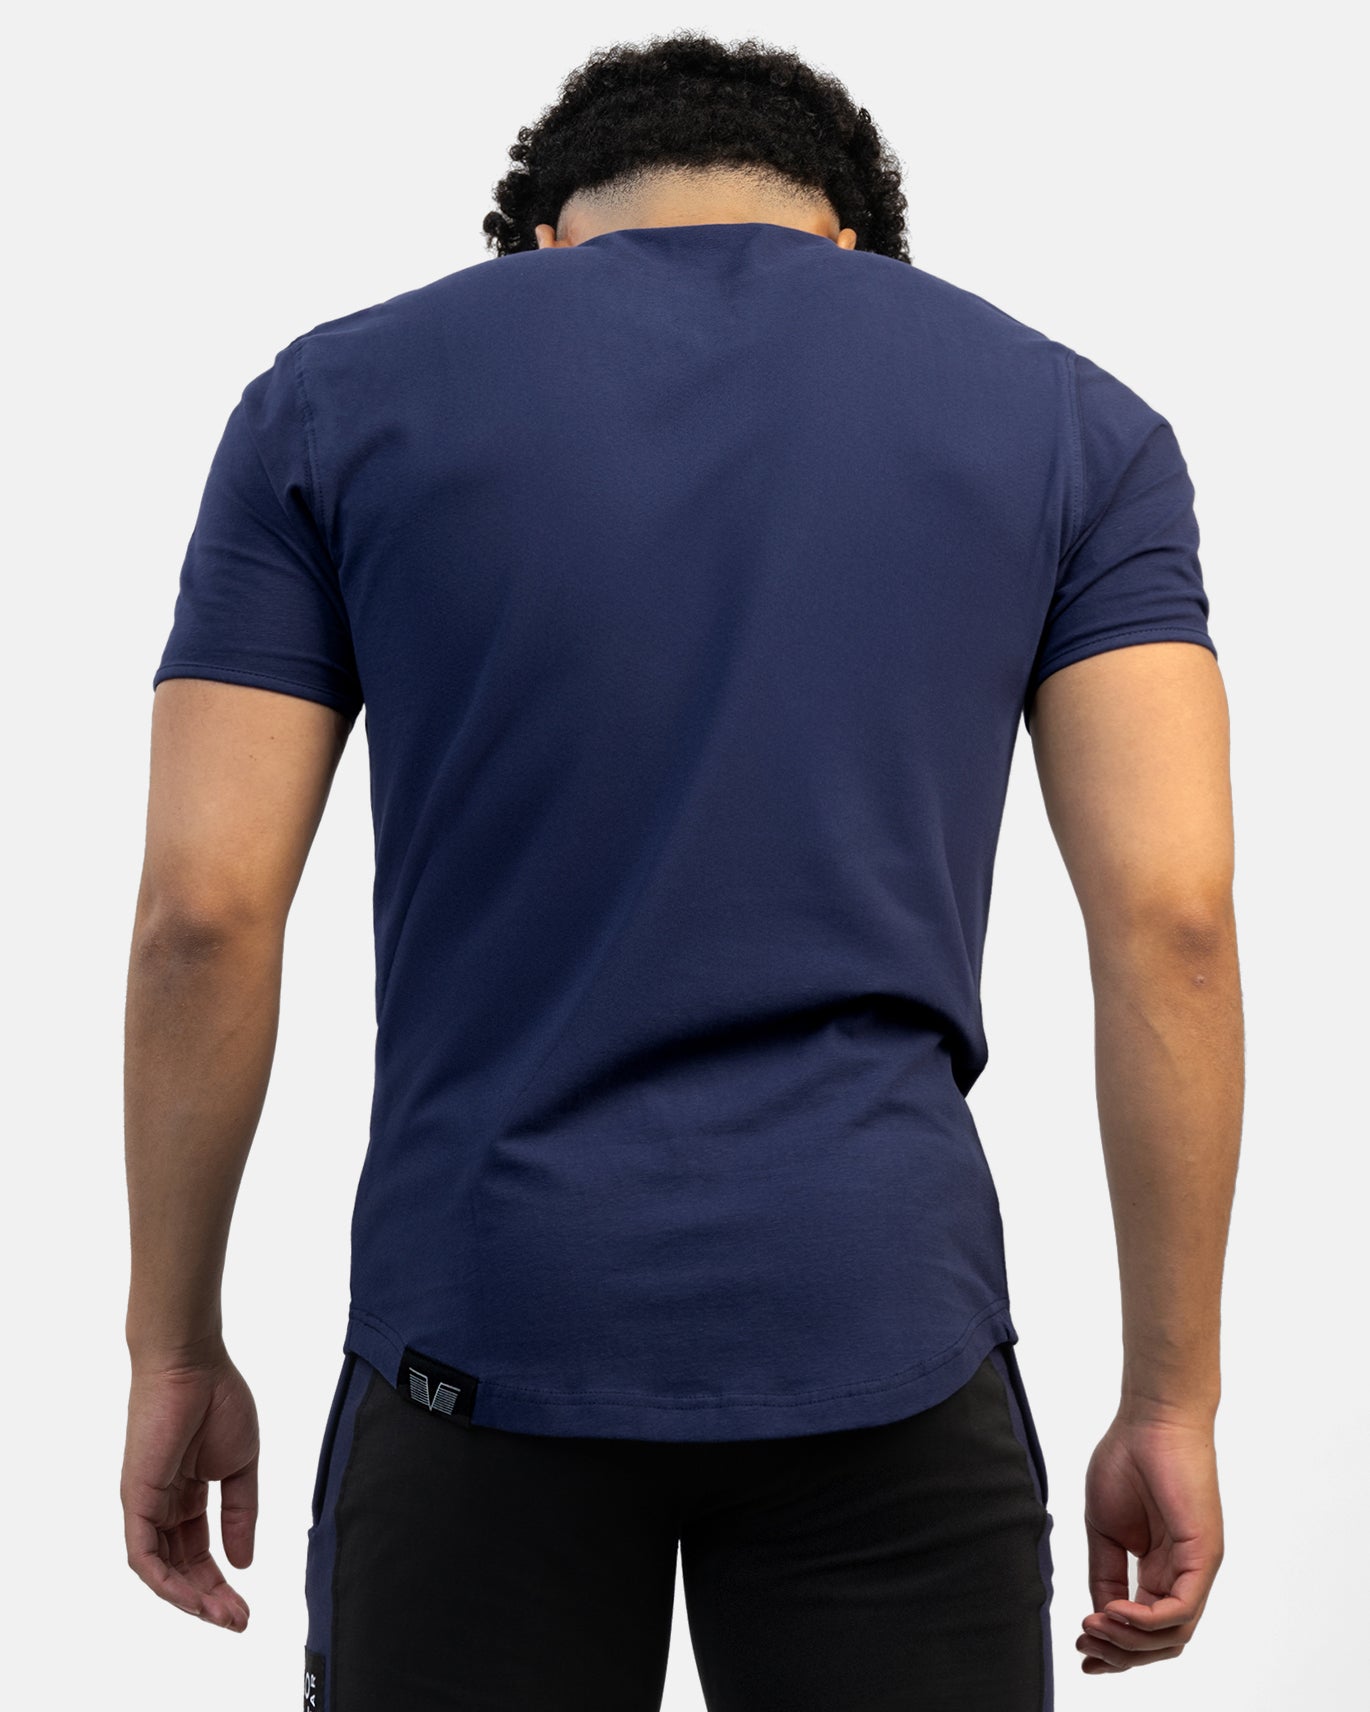 GAVELO Athleisure T-Shirt Urban Blue